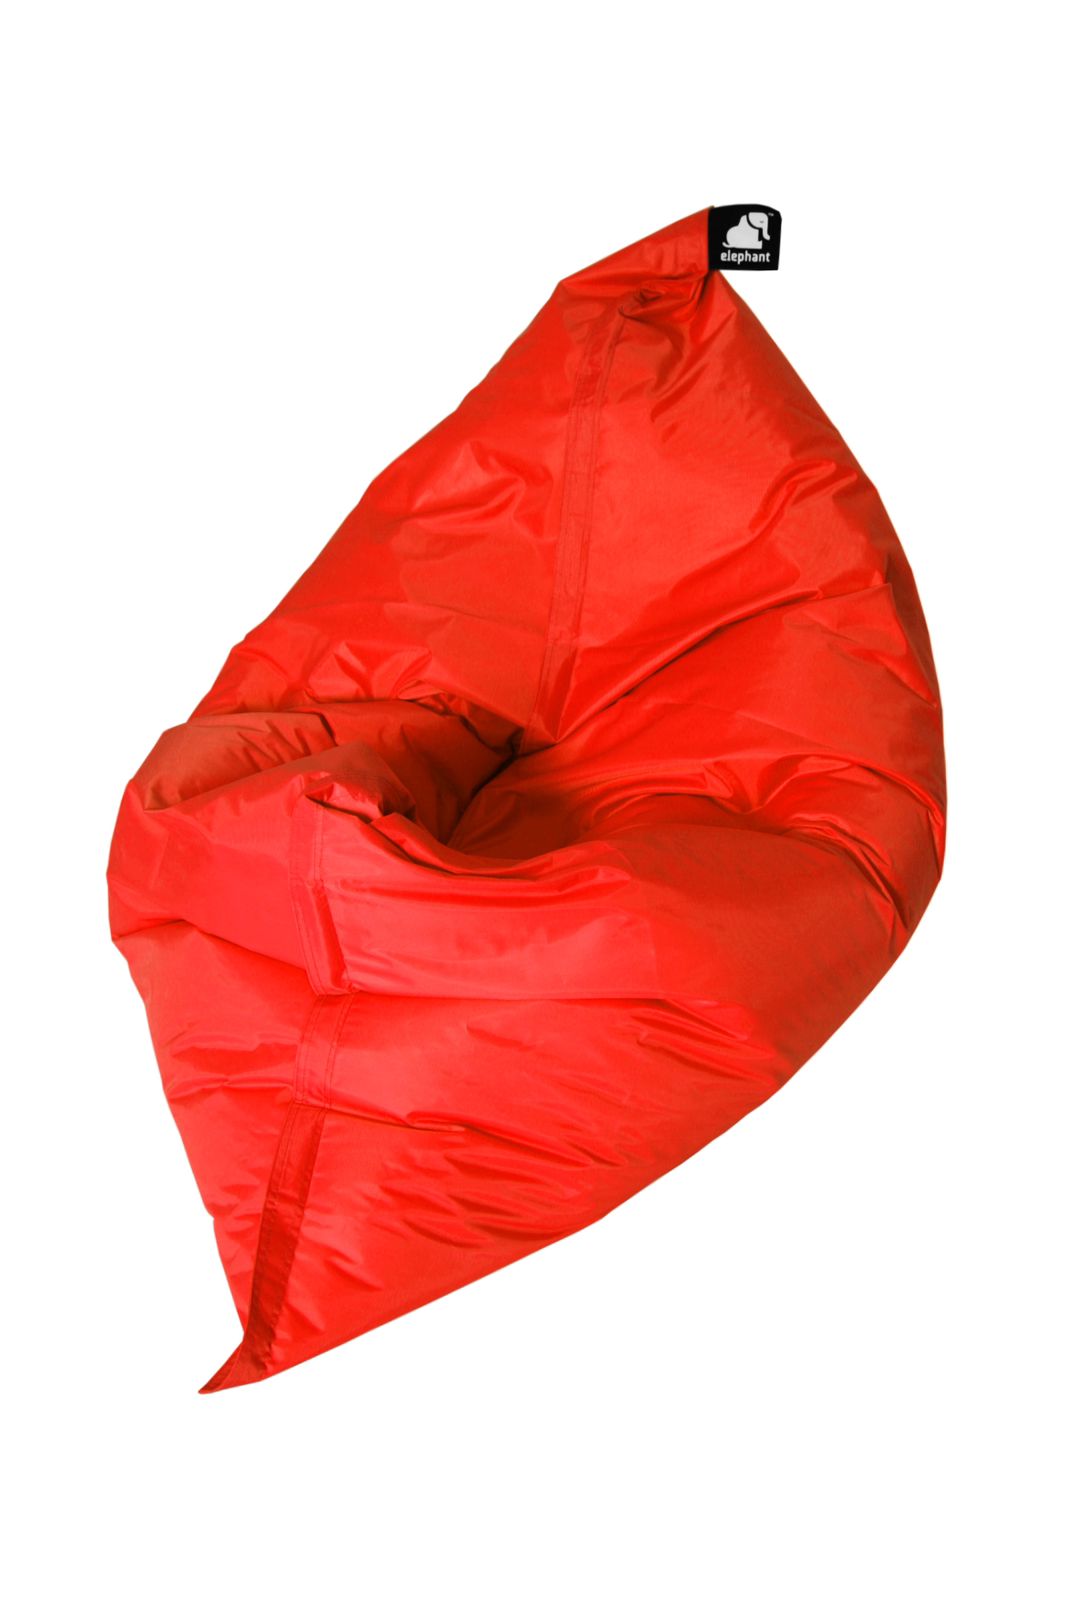 Elephant Jumbo Bean Bag - Vibrant Red